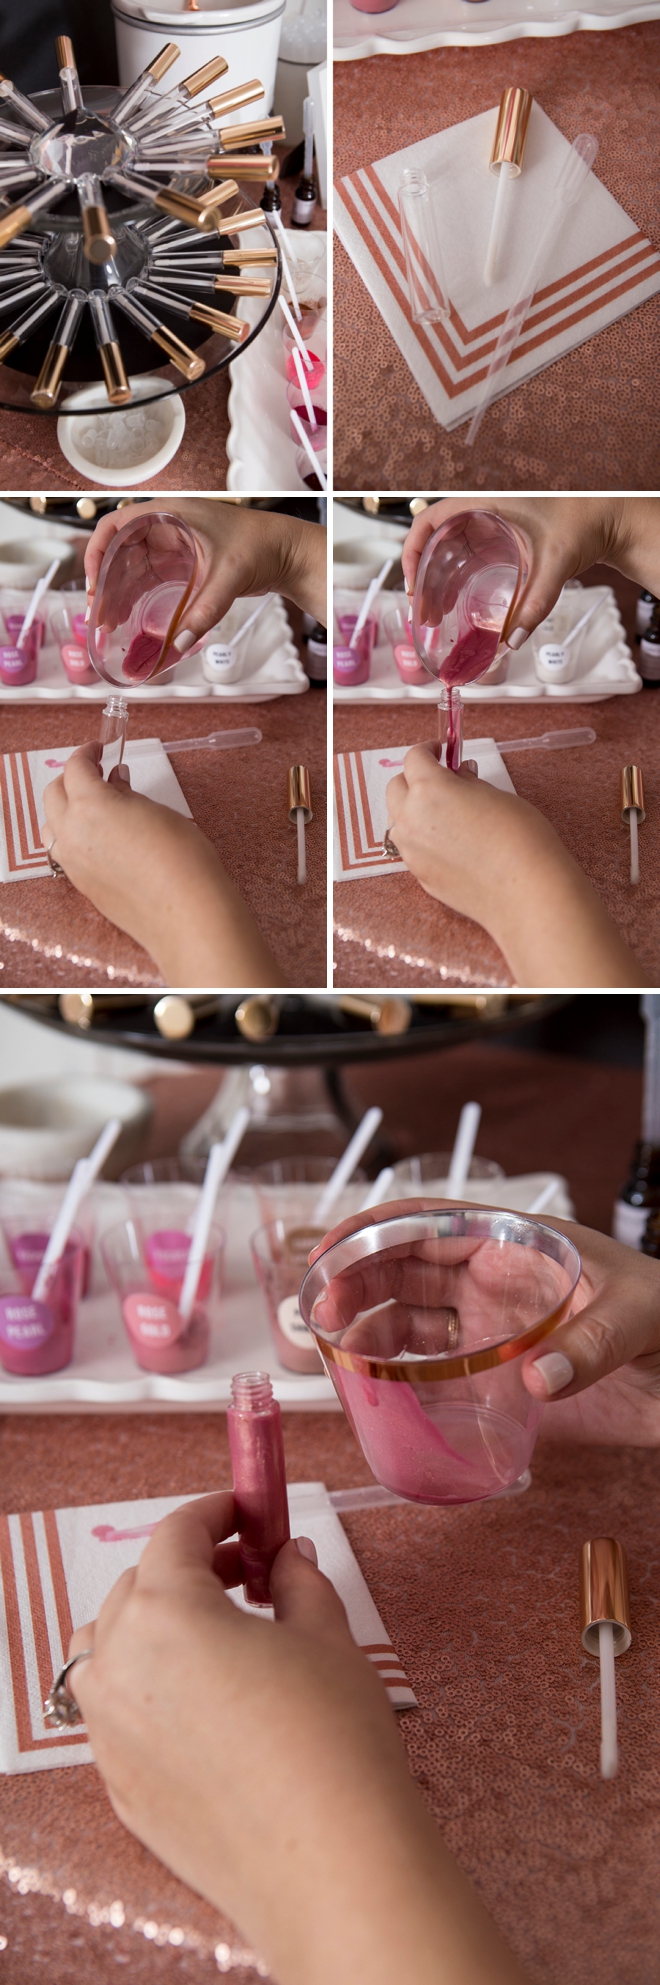 Learn how to make your own custom lip gloss!